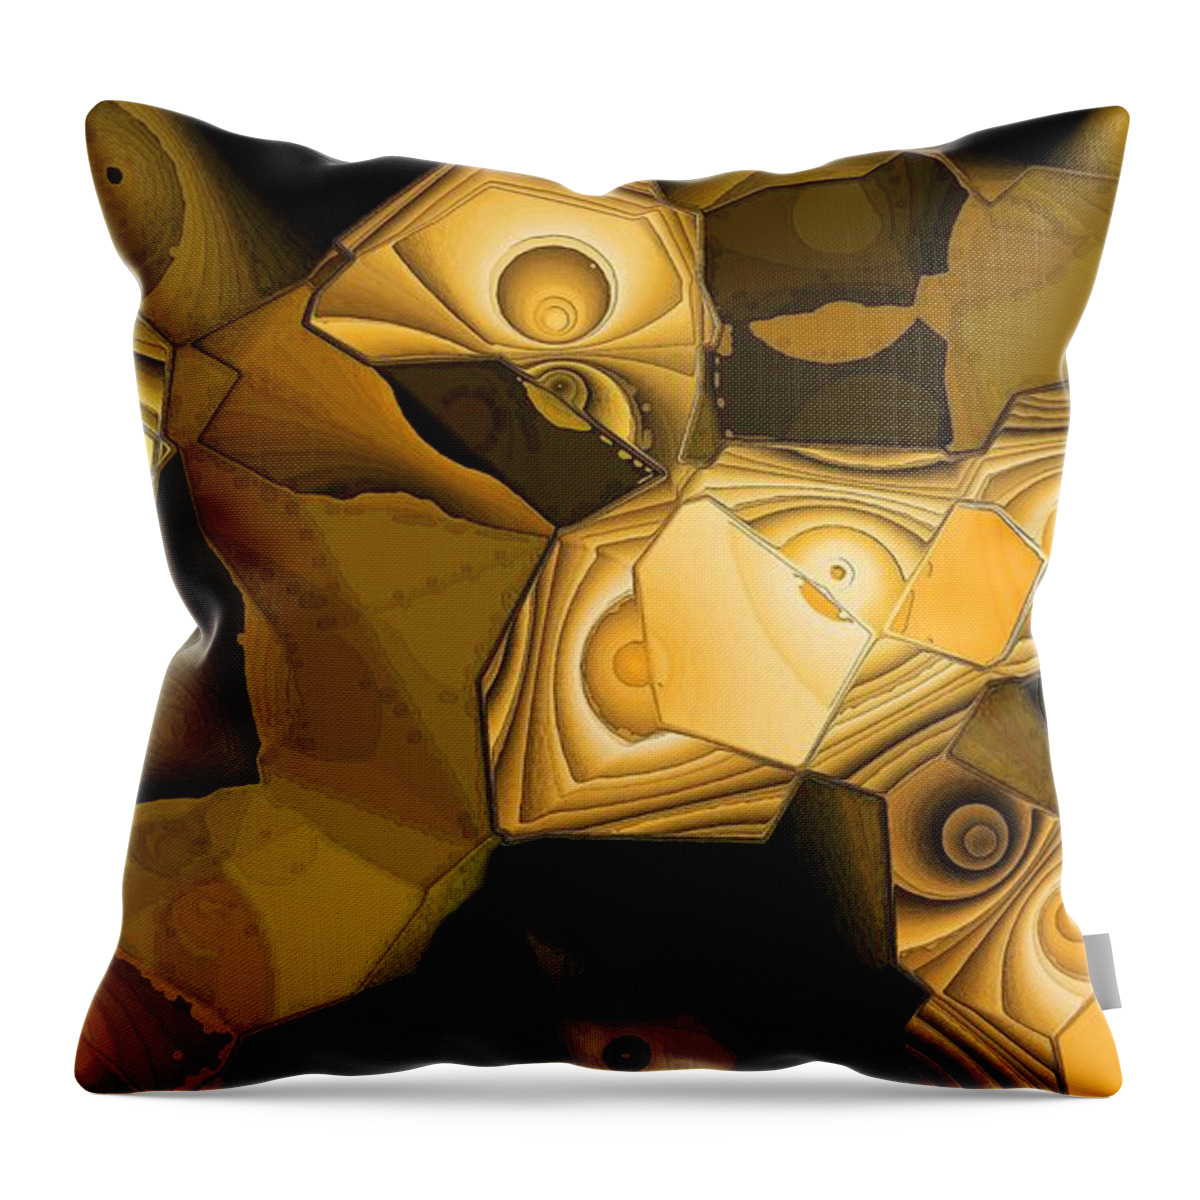 Orange Throw Pillow featuring the digital art Browns by Ronald Bissett